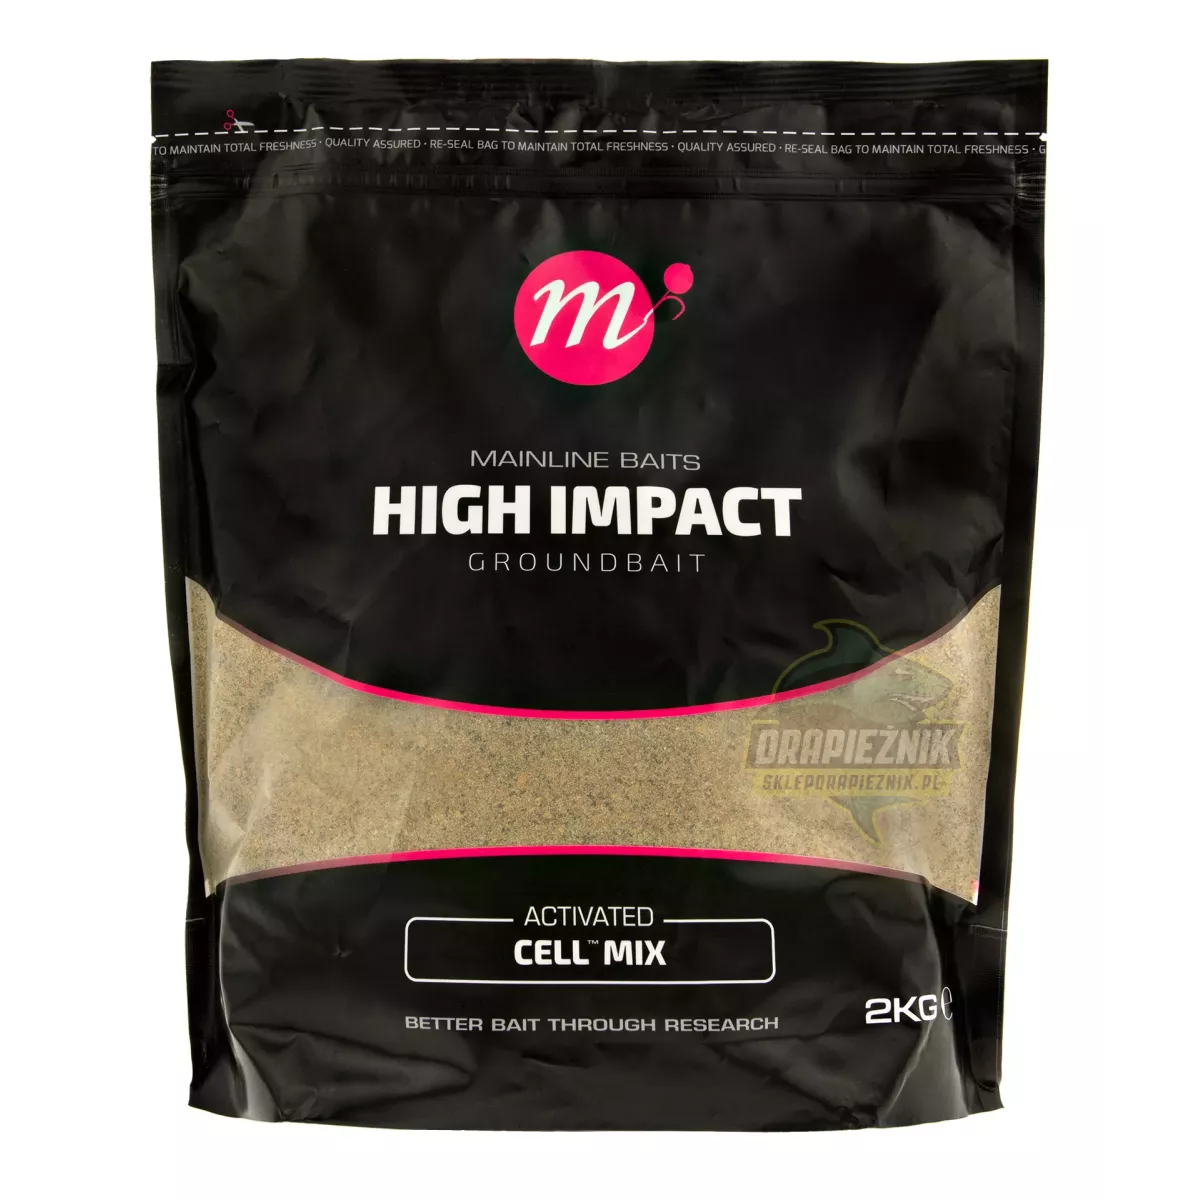 Zanęta High Impact Groundbait 2kg - Active Cell Mix